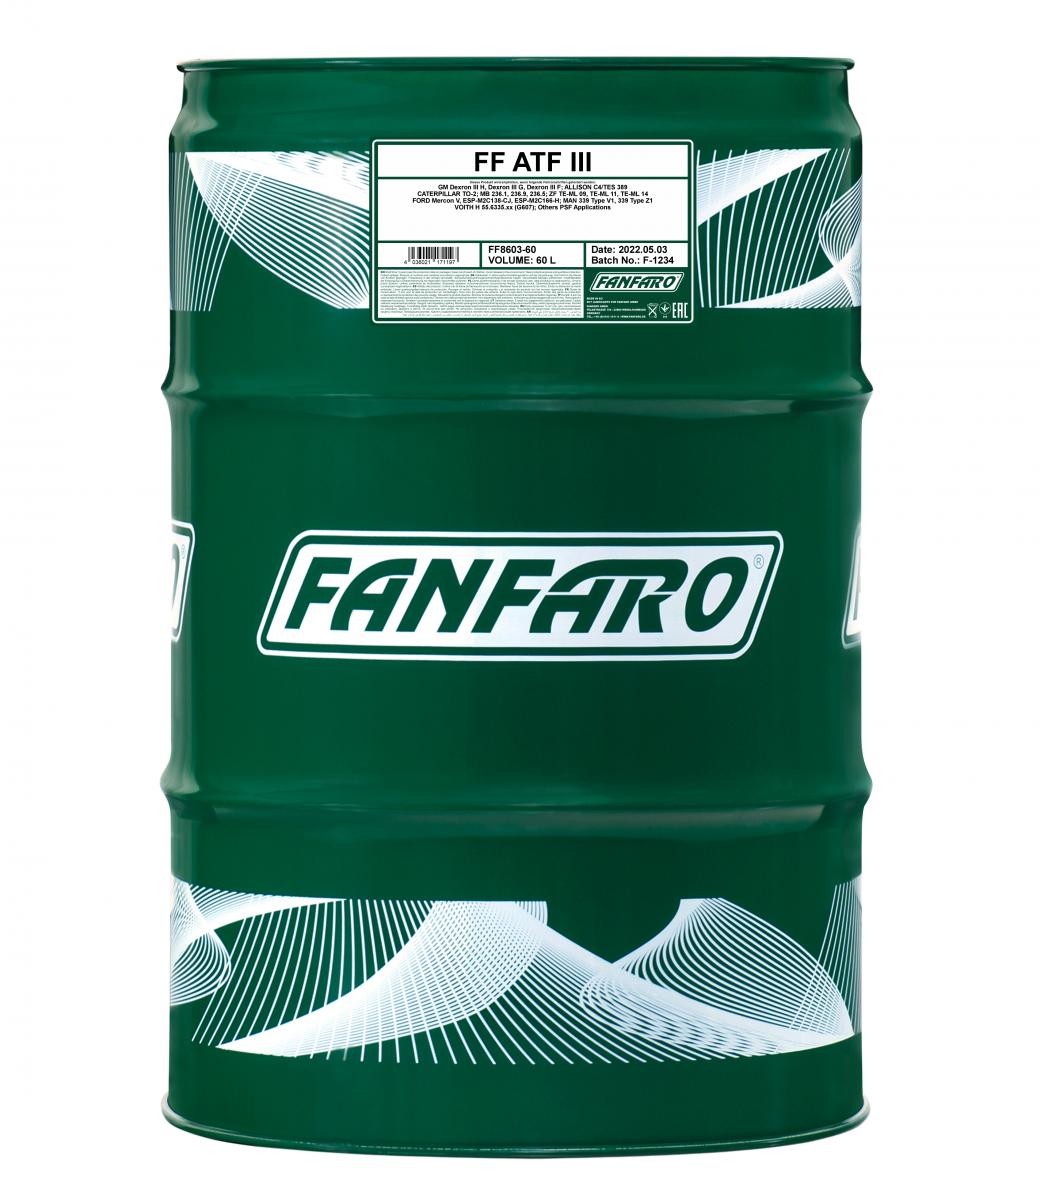 Original FF8603-60 FANFARO CVT oil VOLVO